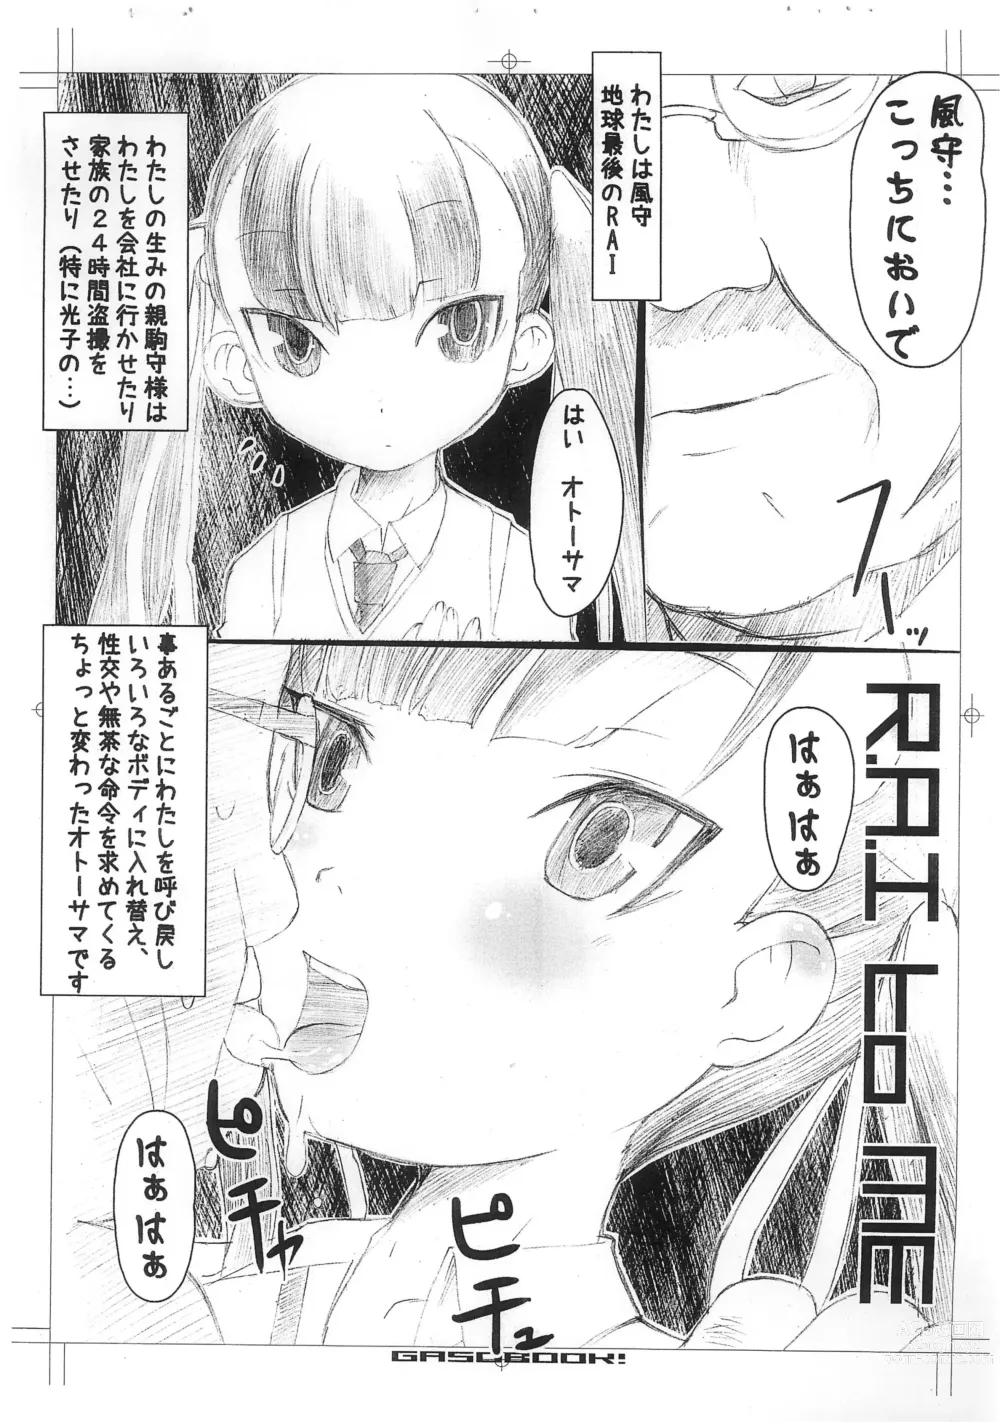 Page 12 of doujinshi U GASOBook.1112